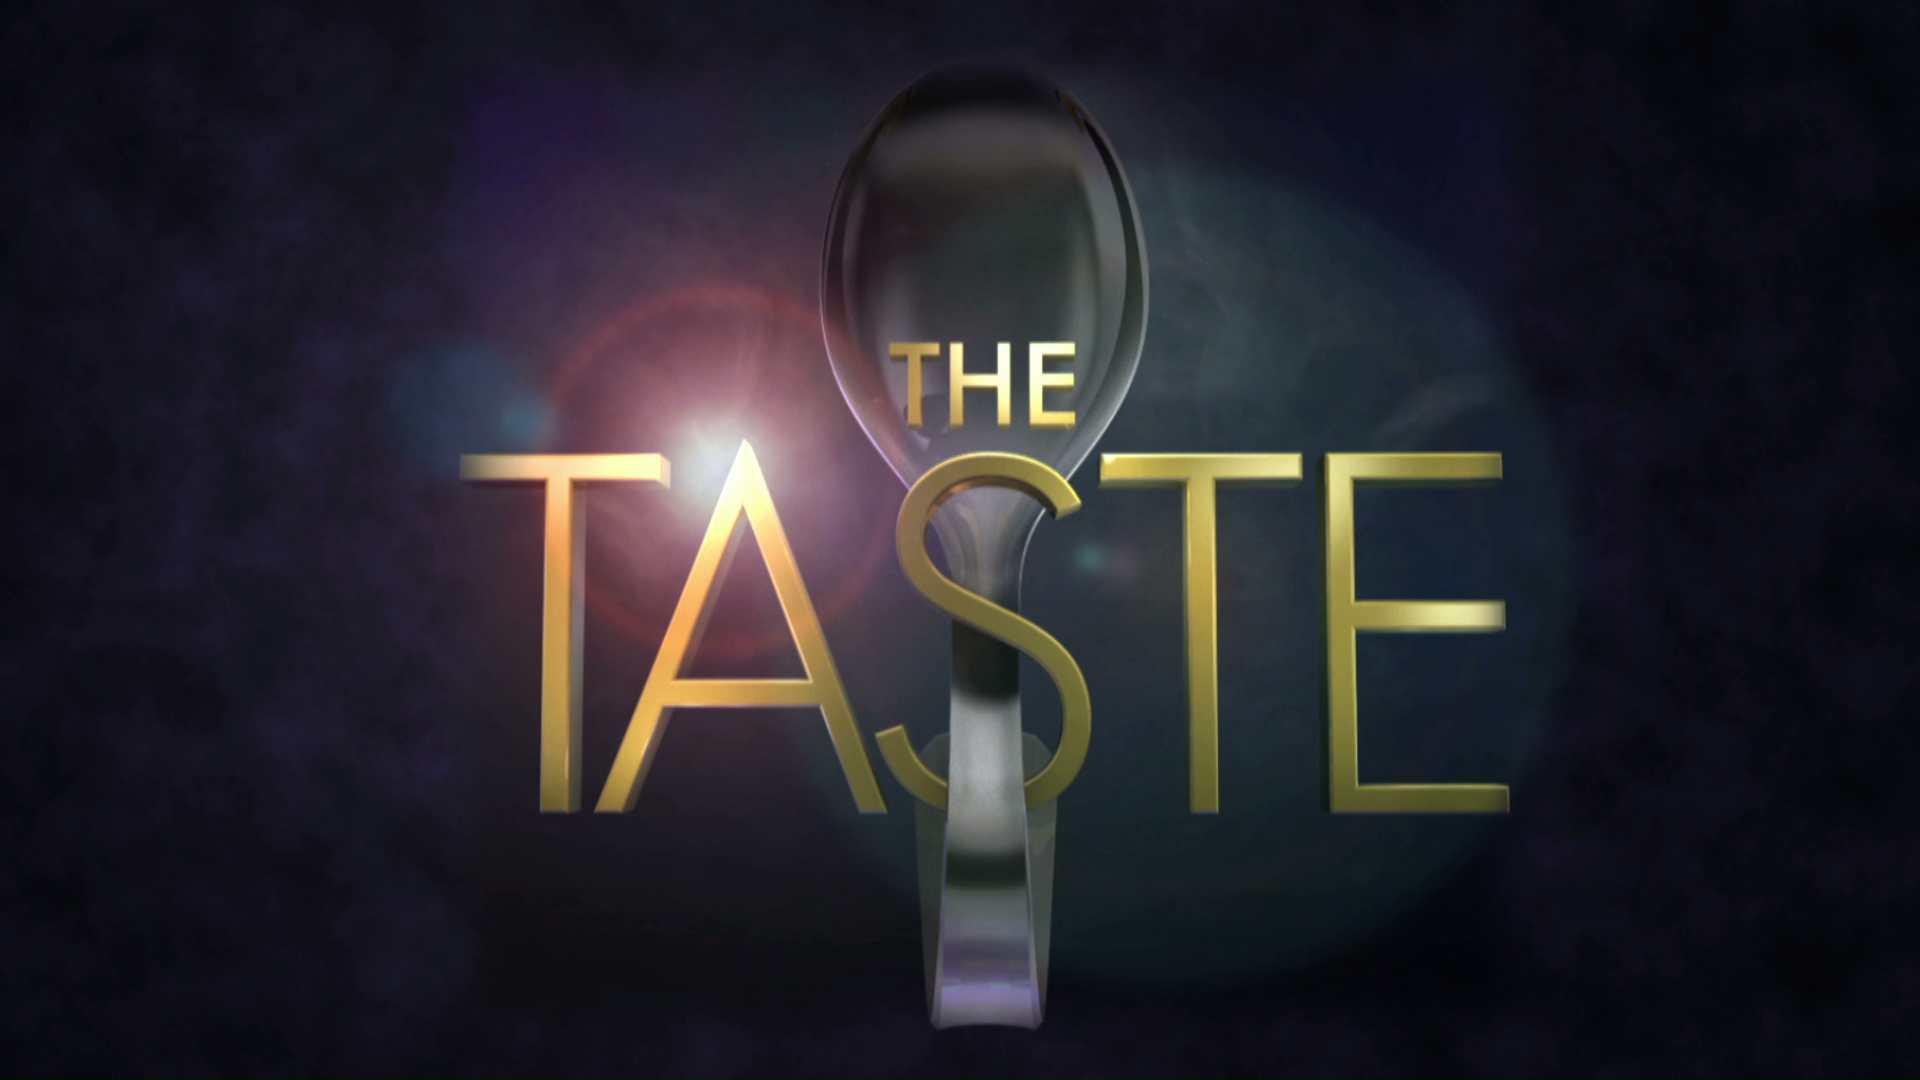 The Taste (DE)